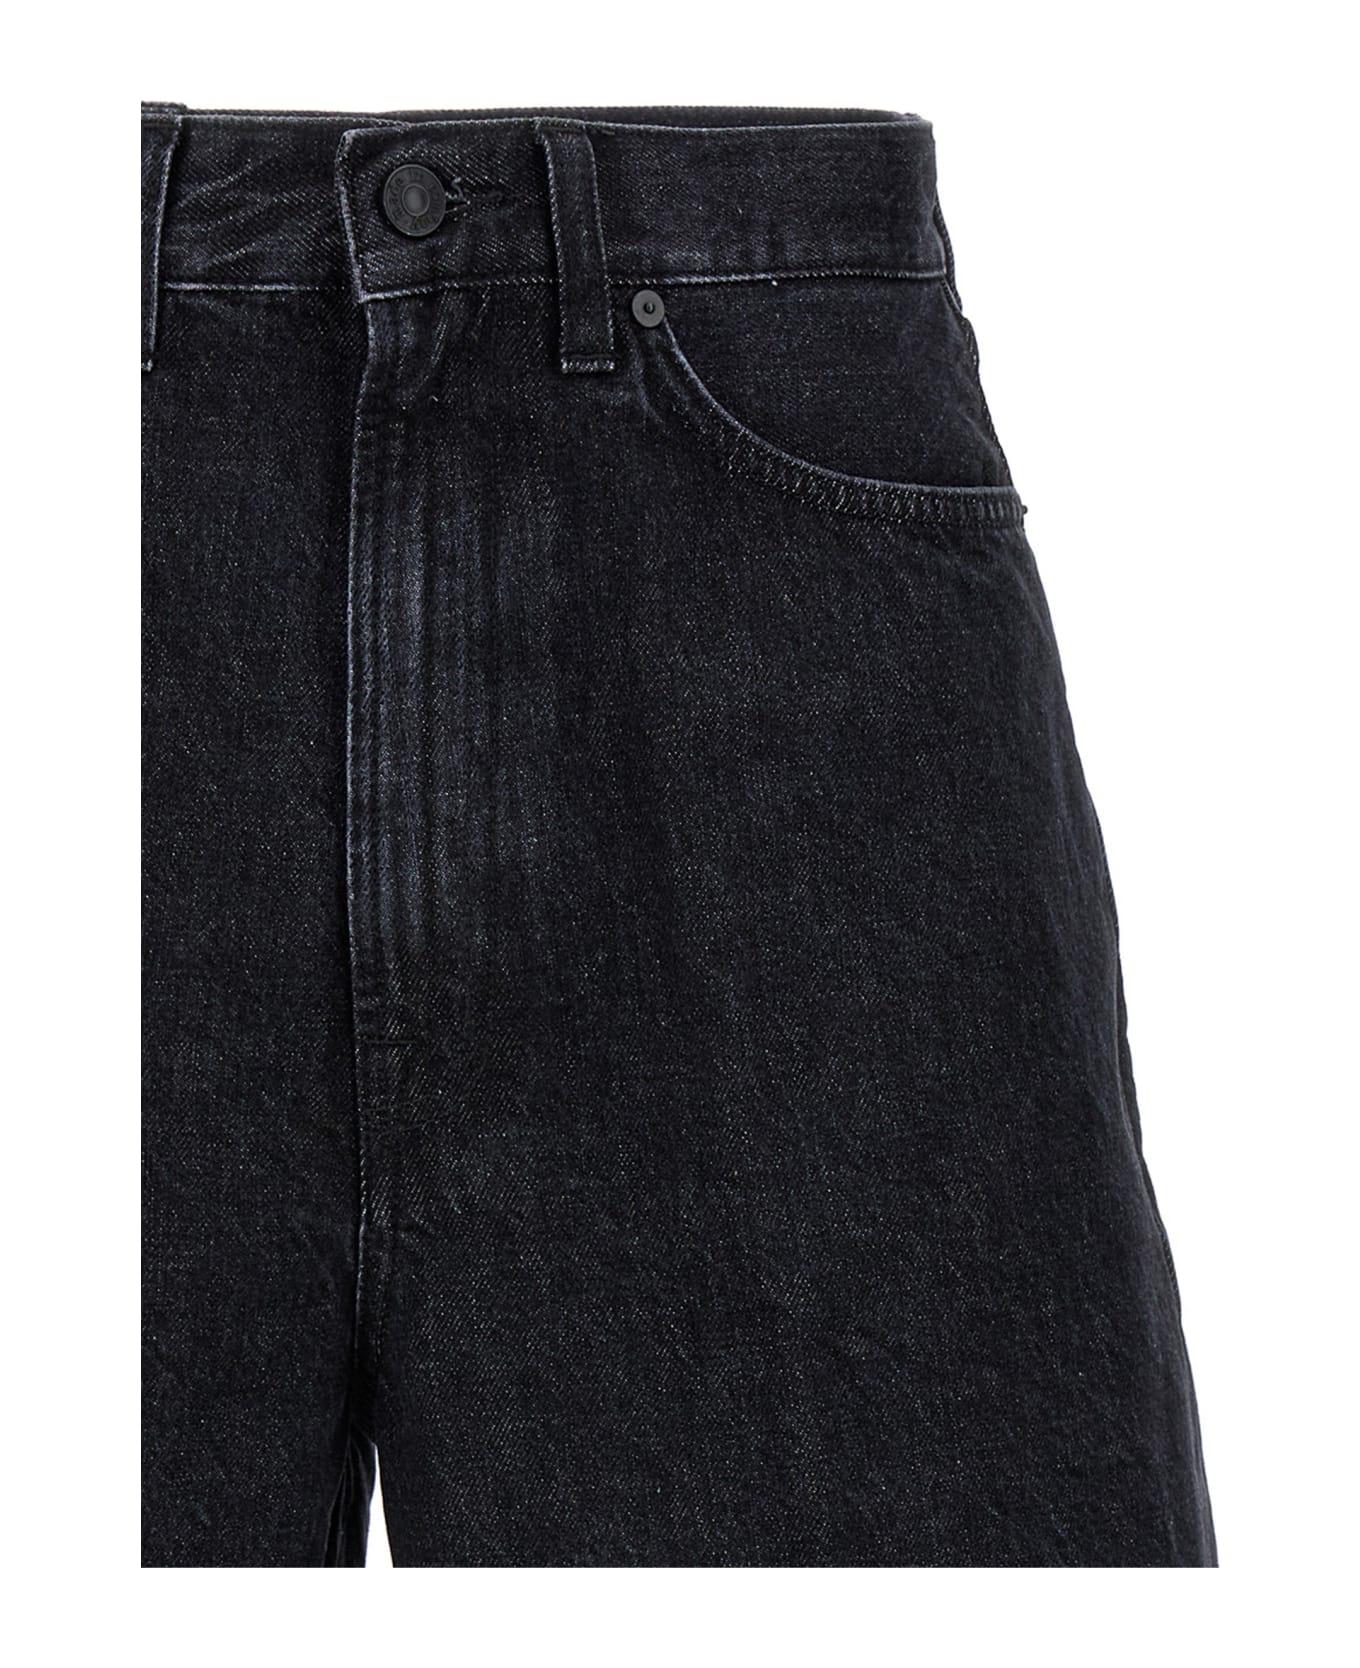 Made in Tomboy Denim Bermuda Shorts - Black   ショートパンツ